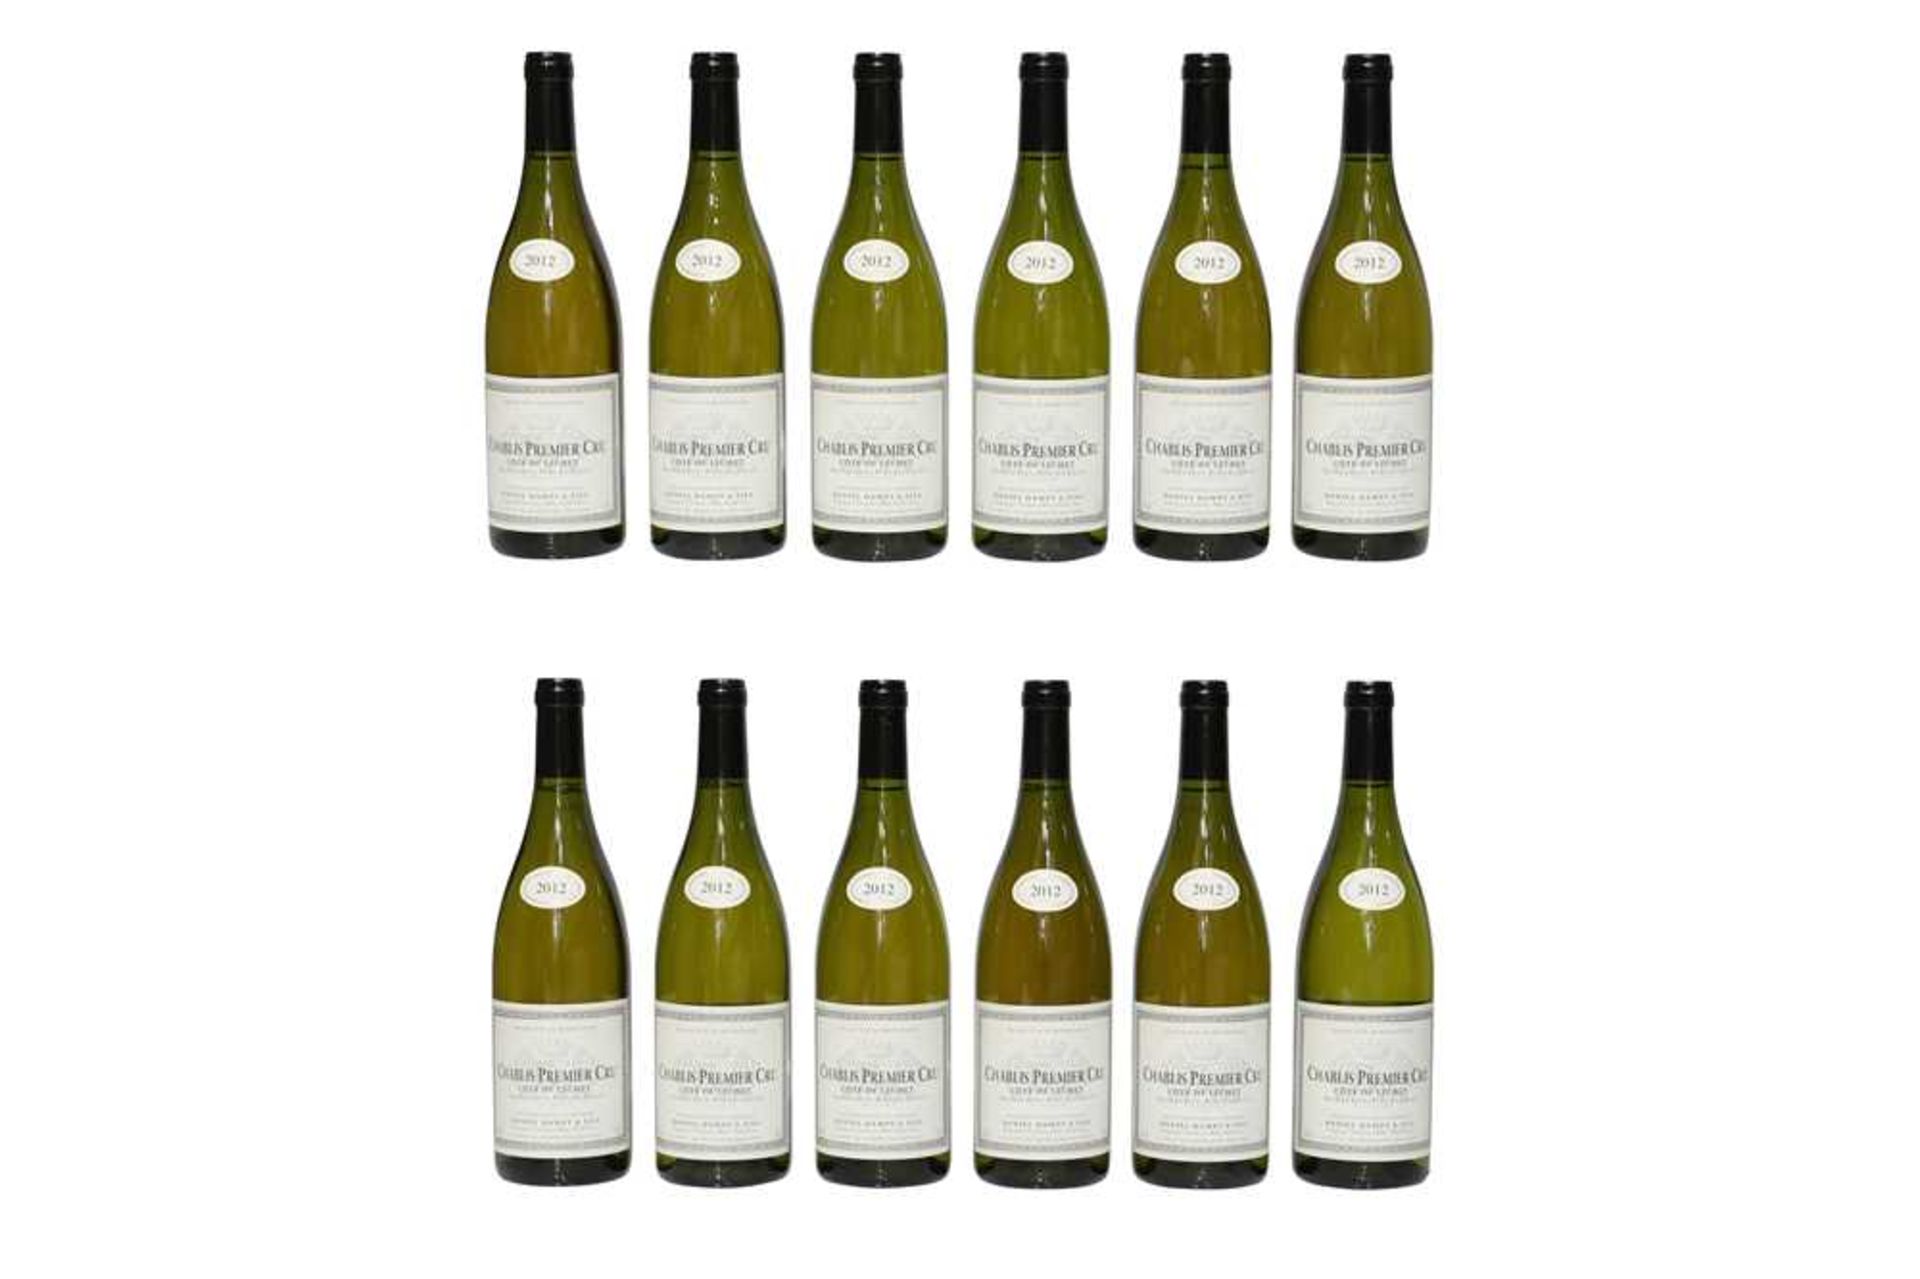 Chablis 1er Cru, Cote de Lechet, Daniel Dampt & Fils, 2012, twelve bottles